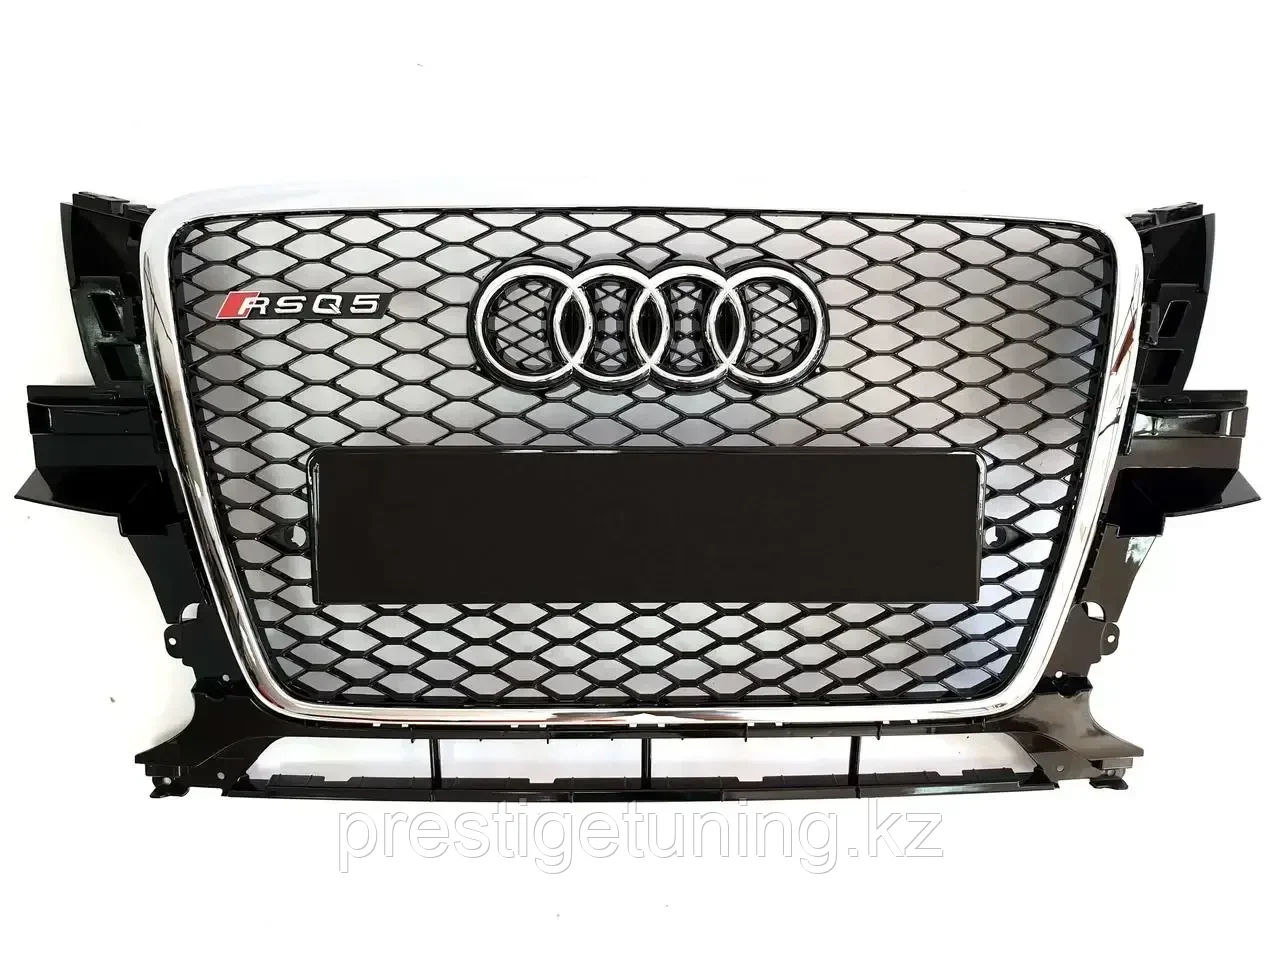 Решетка радиатора Audi Q5 I (8R) 2008-12 стиль RSQ5 (Хром), фото 1